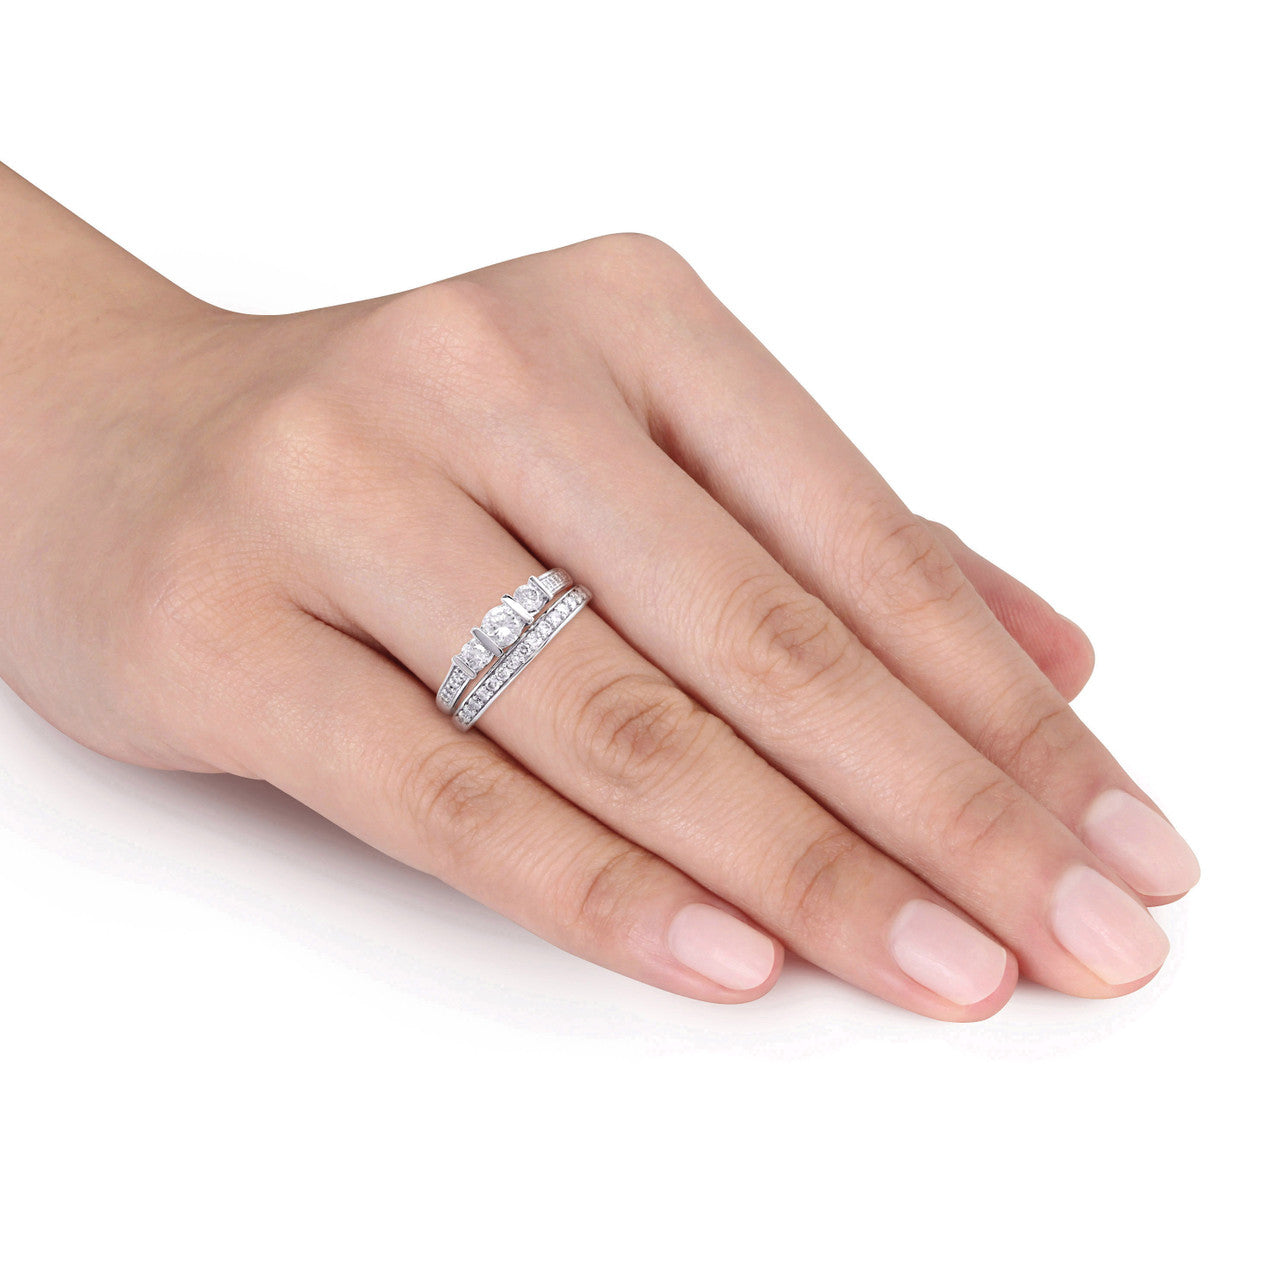 Ice Jewellery 3/4 CT Diamond TW Bridal Set Ring in 10k White Gold - 75000004452 | Ice Jewellery Australia